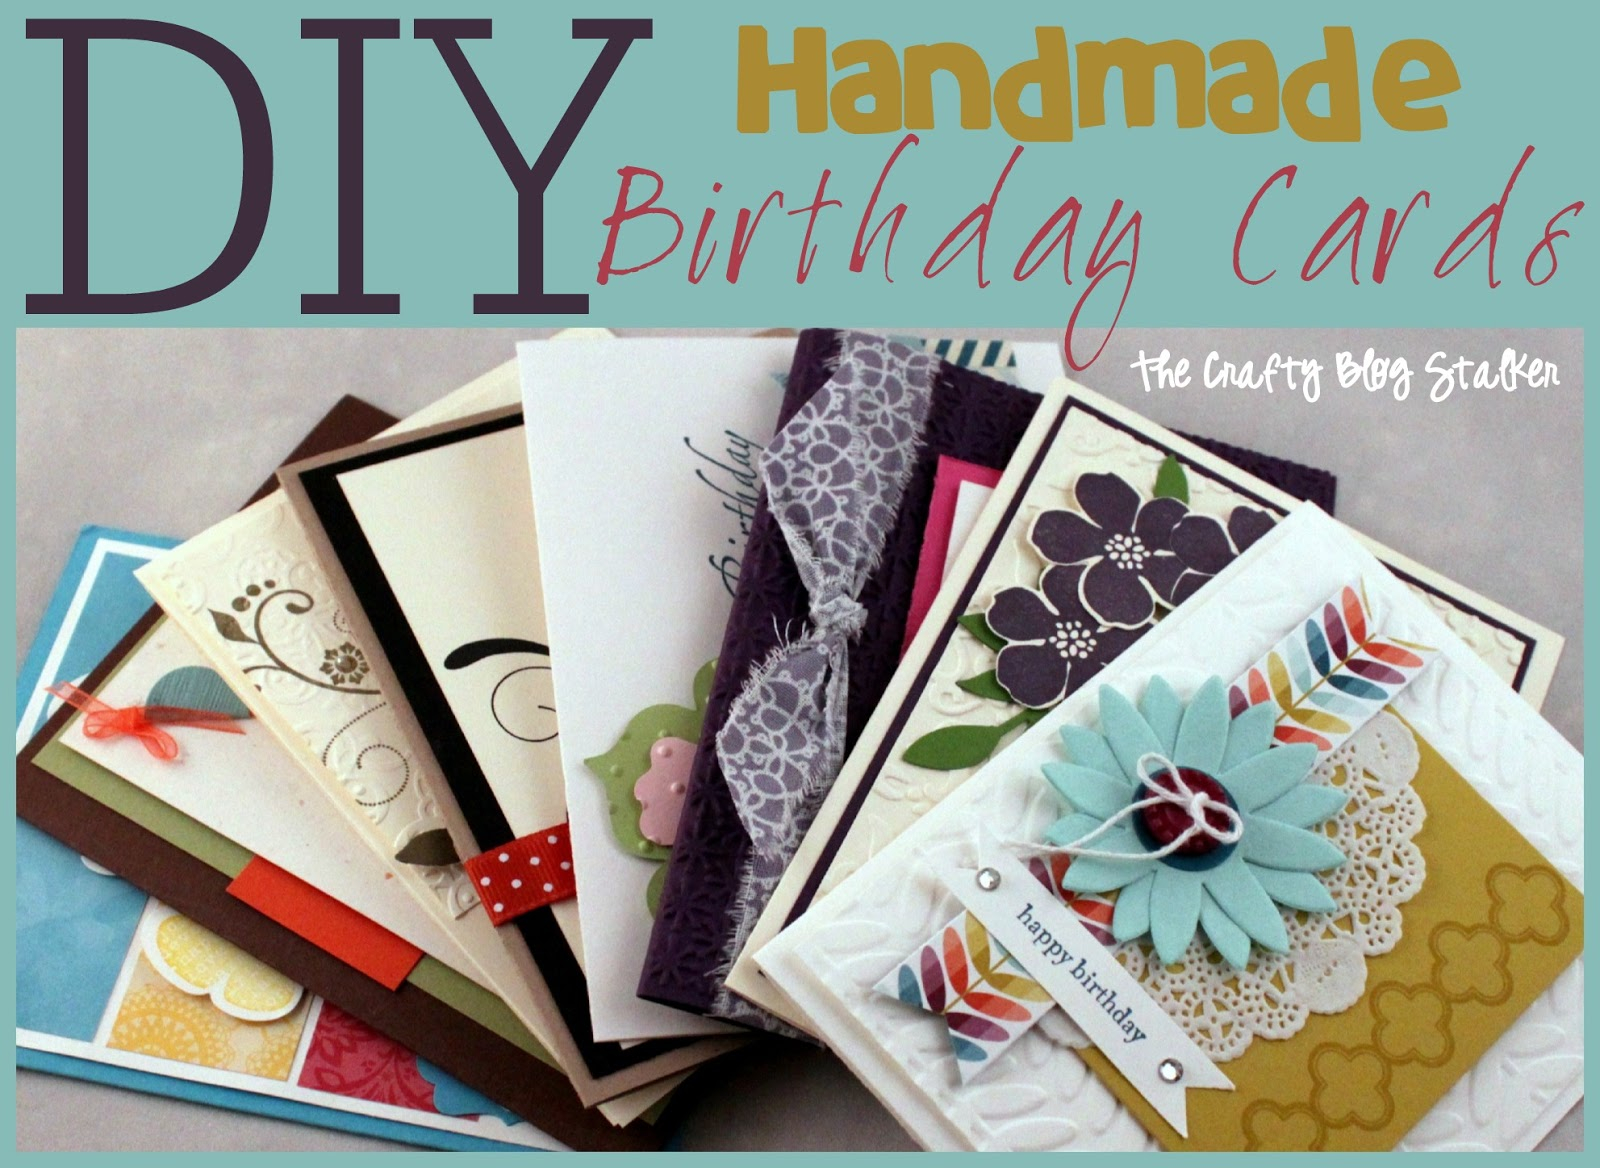 Handmade Greeting Cards For Birthday Ideas Handmade Birthday Card Ideas The Crafty Blog Stalker